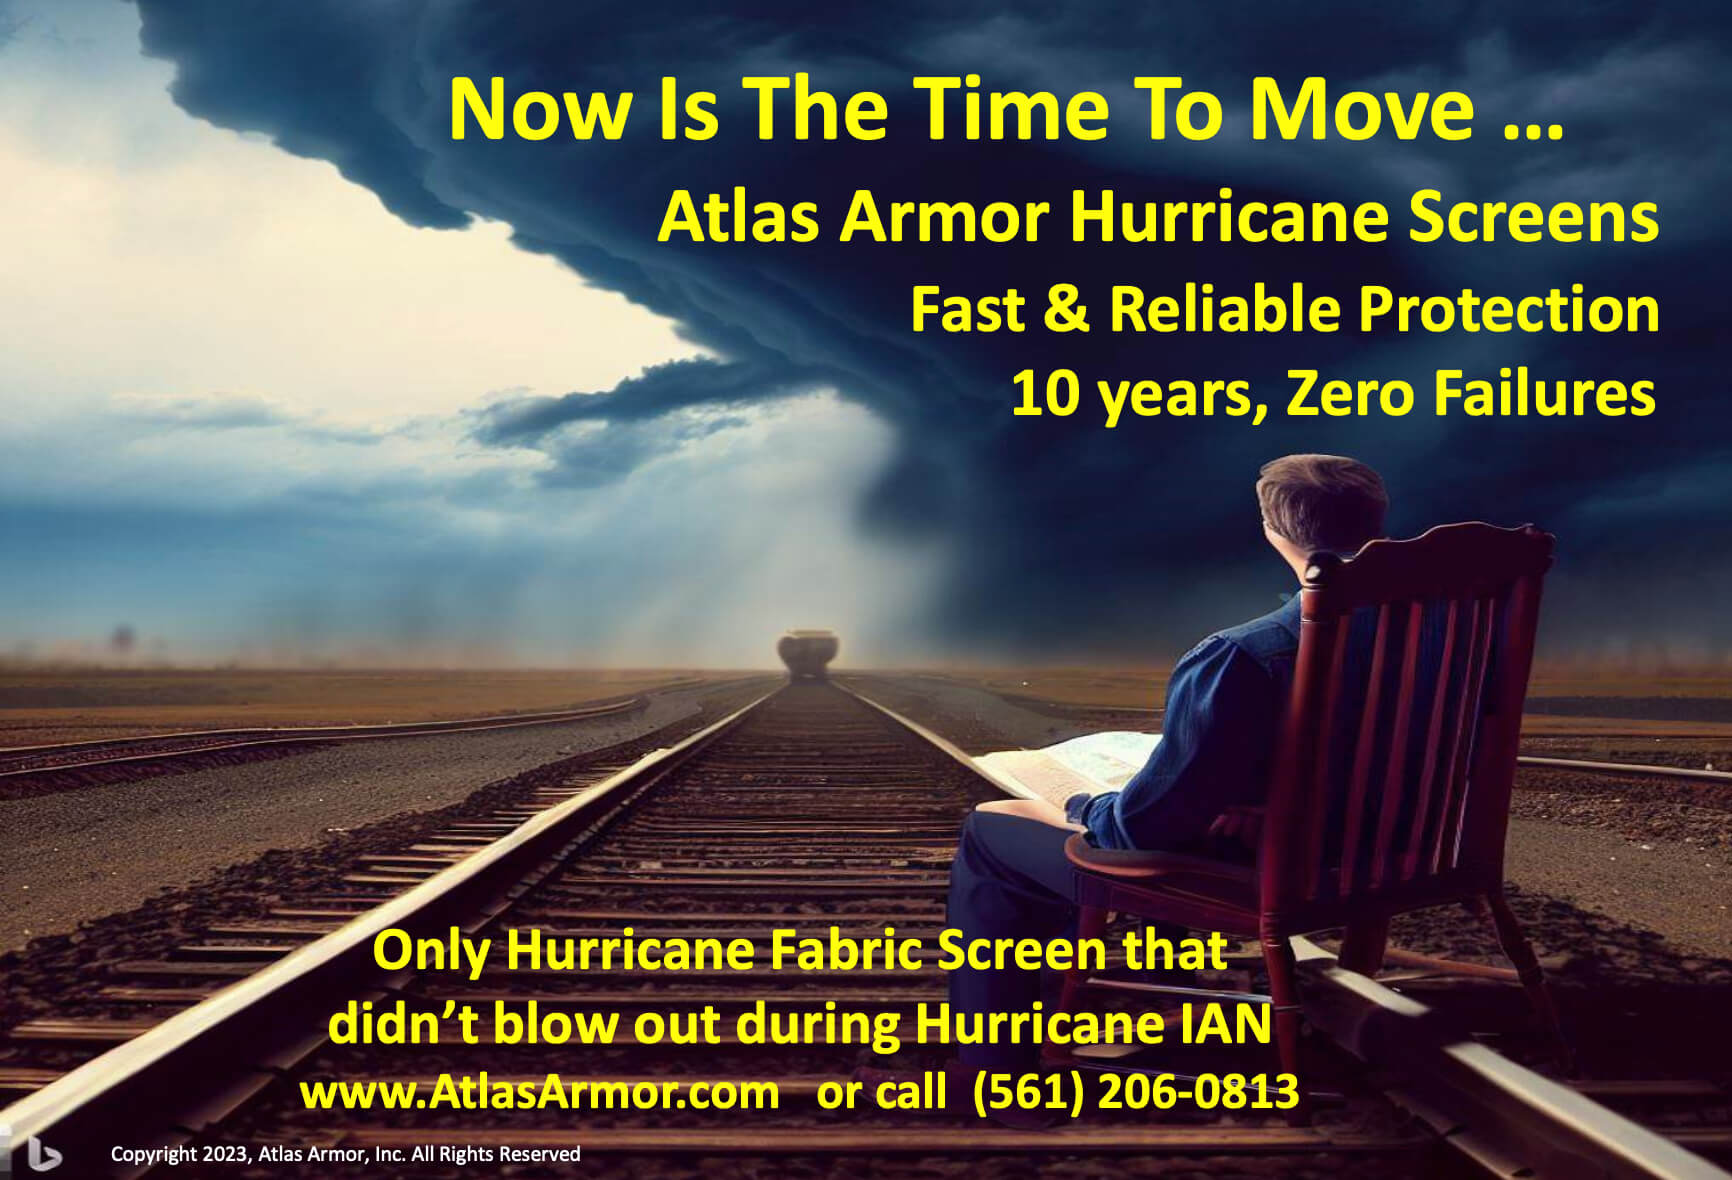 Atlas Armor Hurricane screens